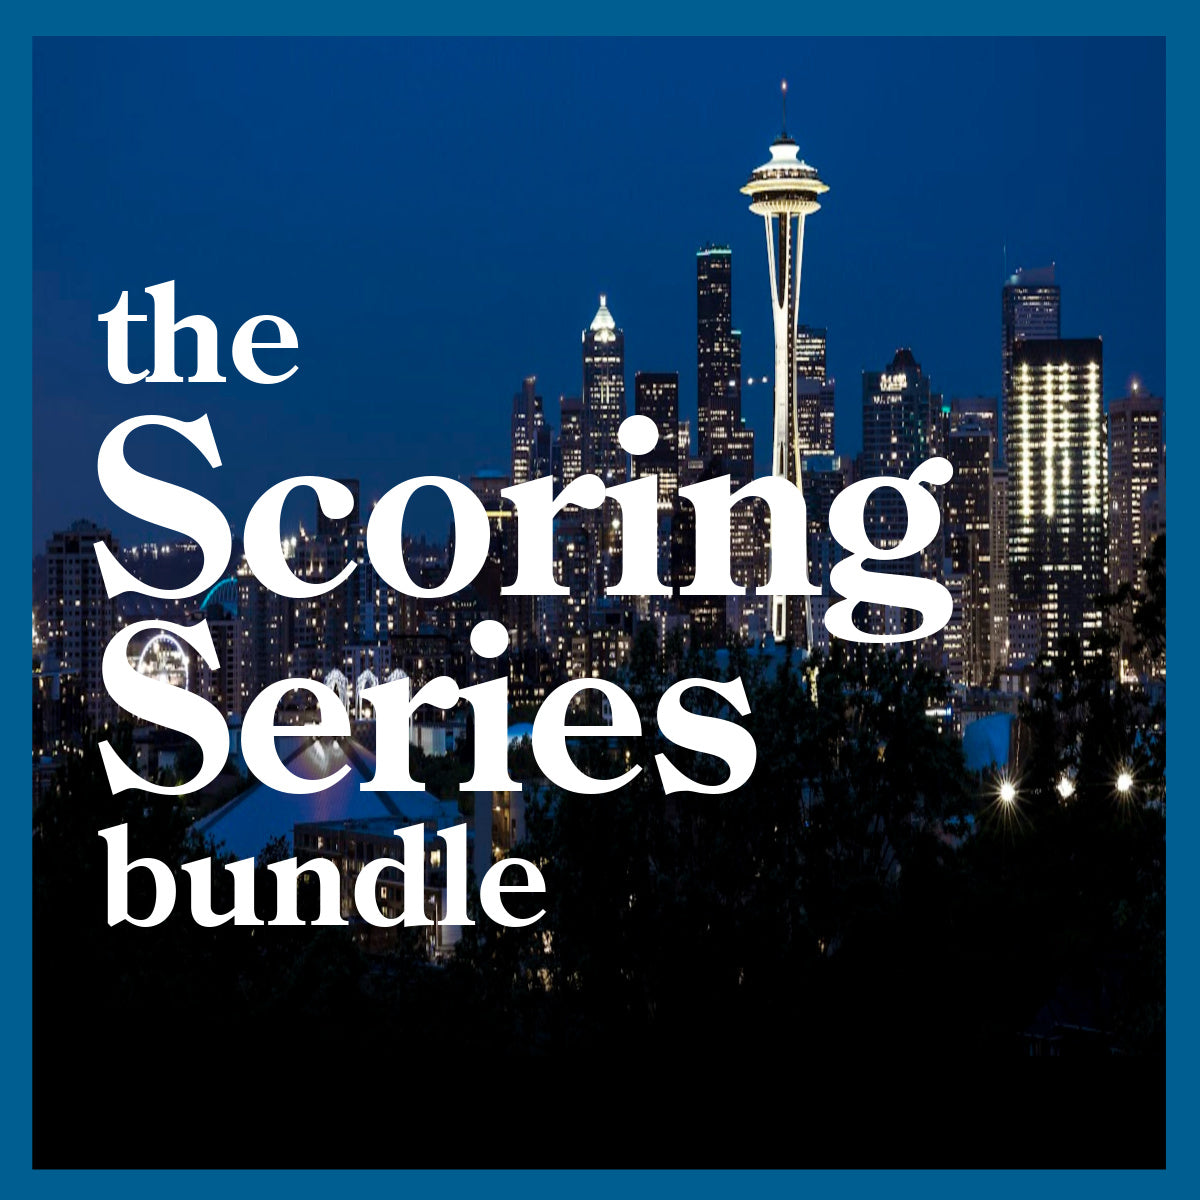 The Scoring Series, Books 7-9